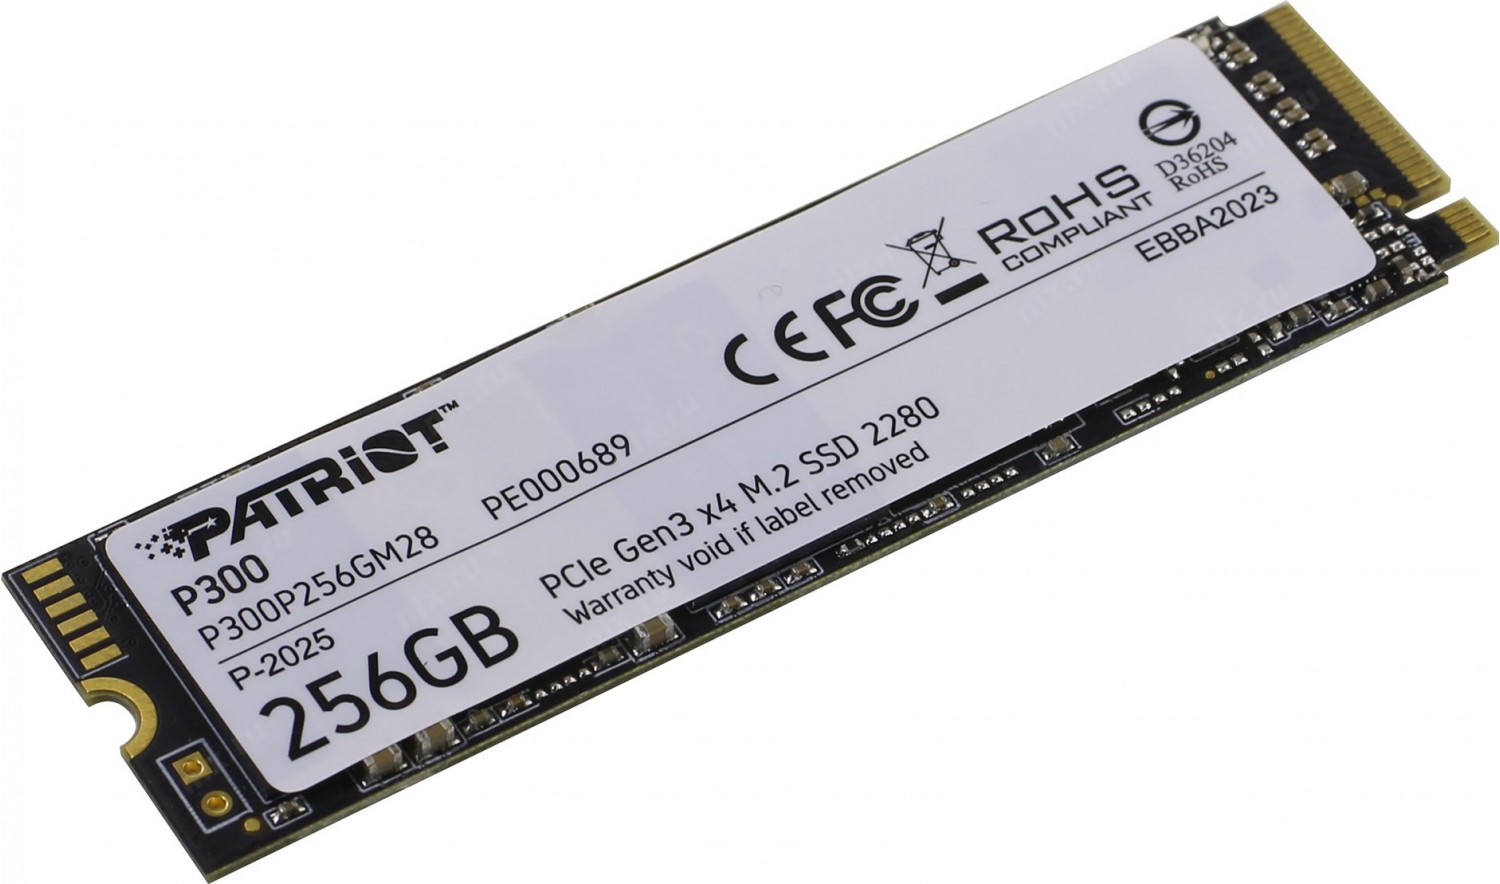 DISCO SSD PATRIOT P300 256 GB M.2 2280 PCIE GEN3 X4 PE000689